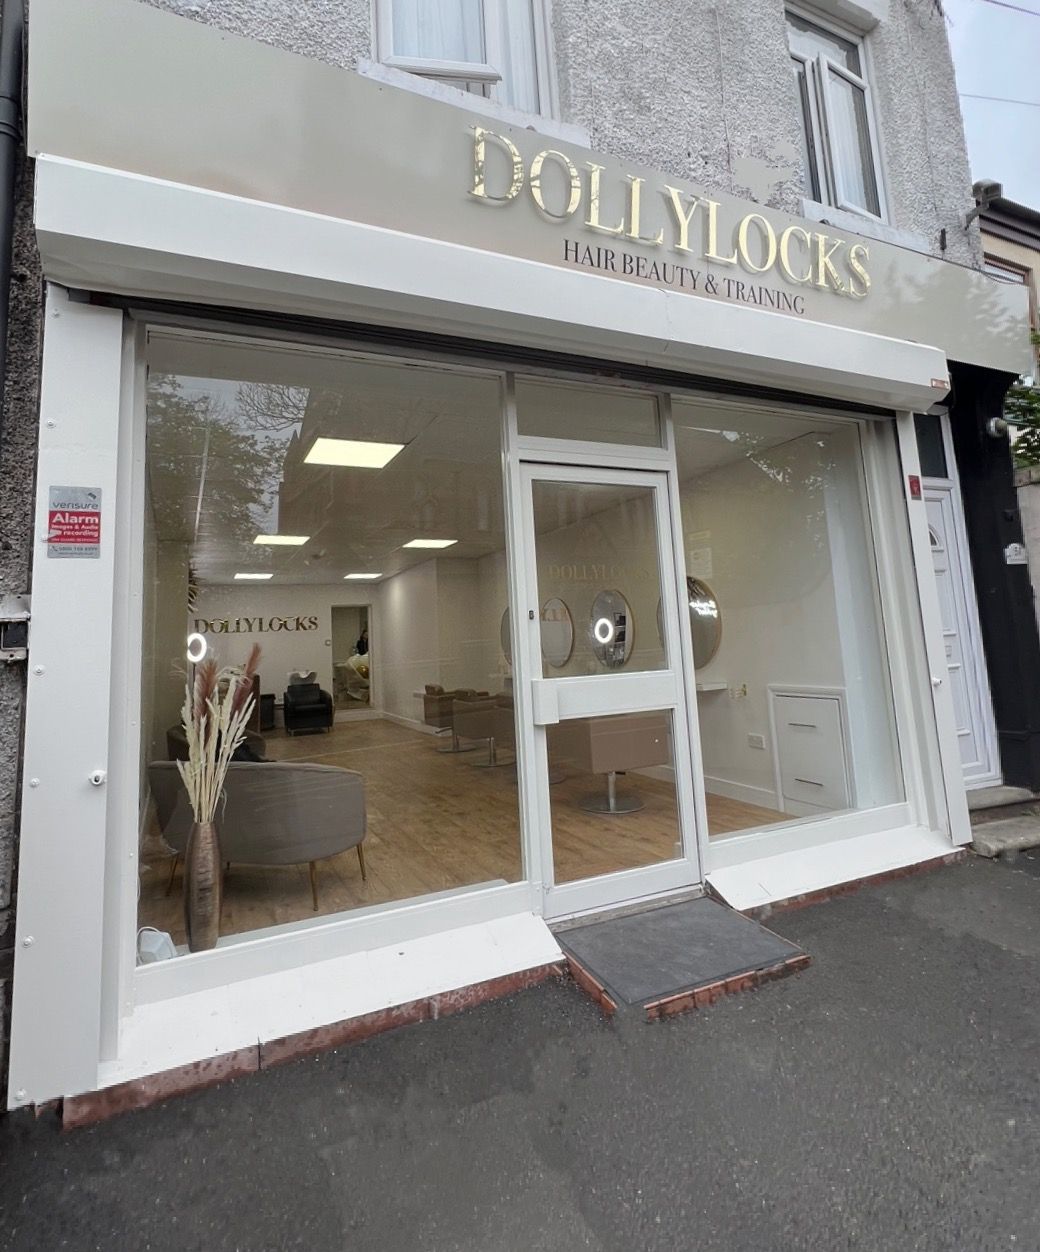 Dollylocks Hair Salon opened on Halton View Road